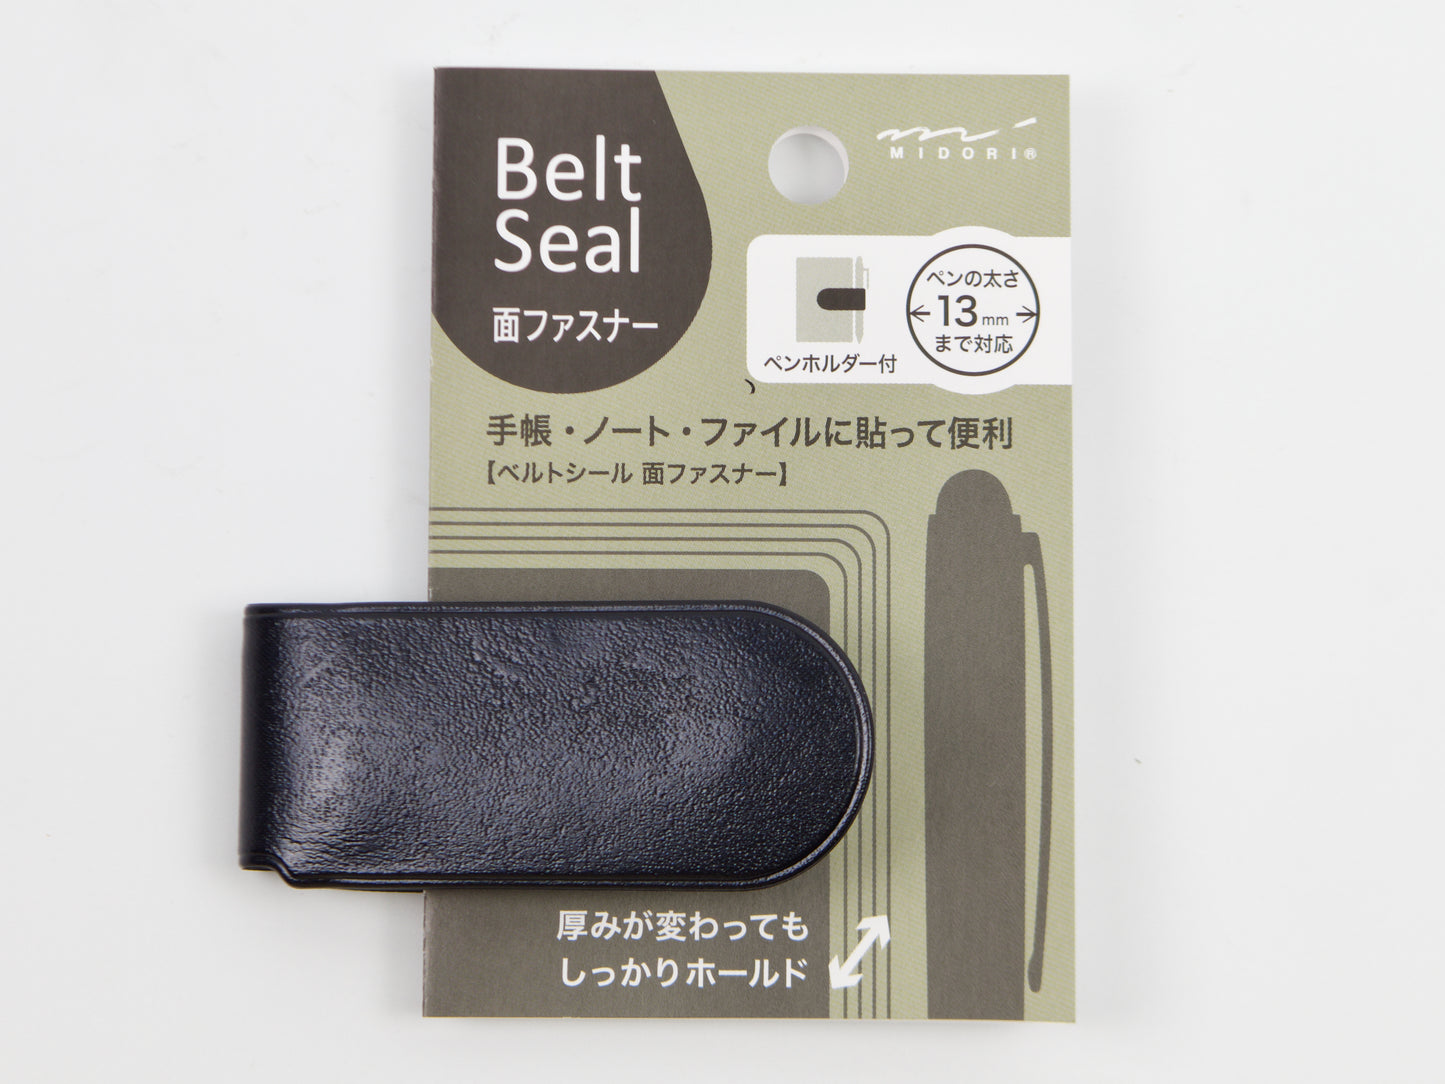 Midori Belt Seal Velcro